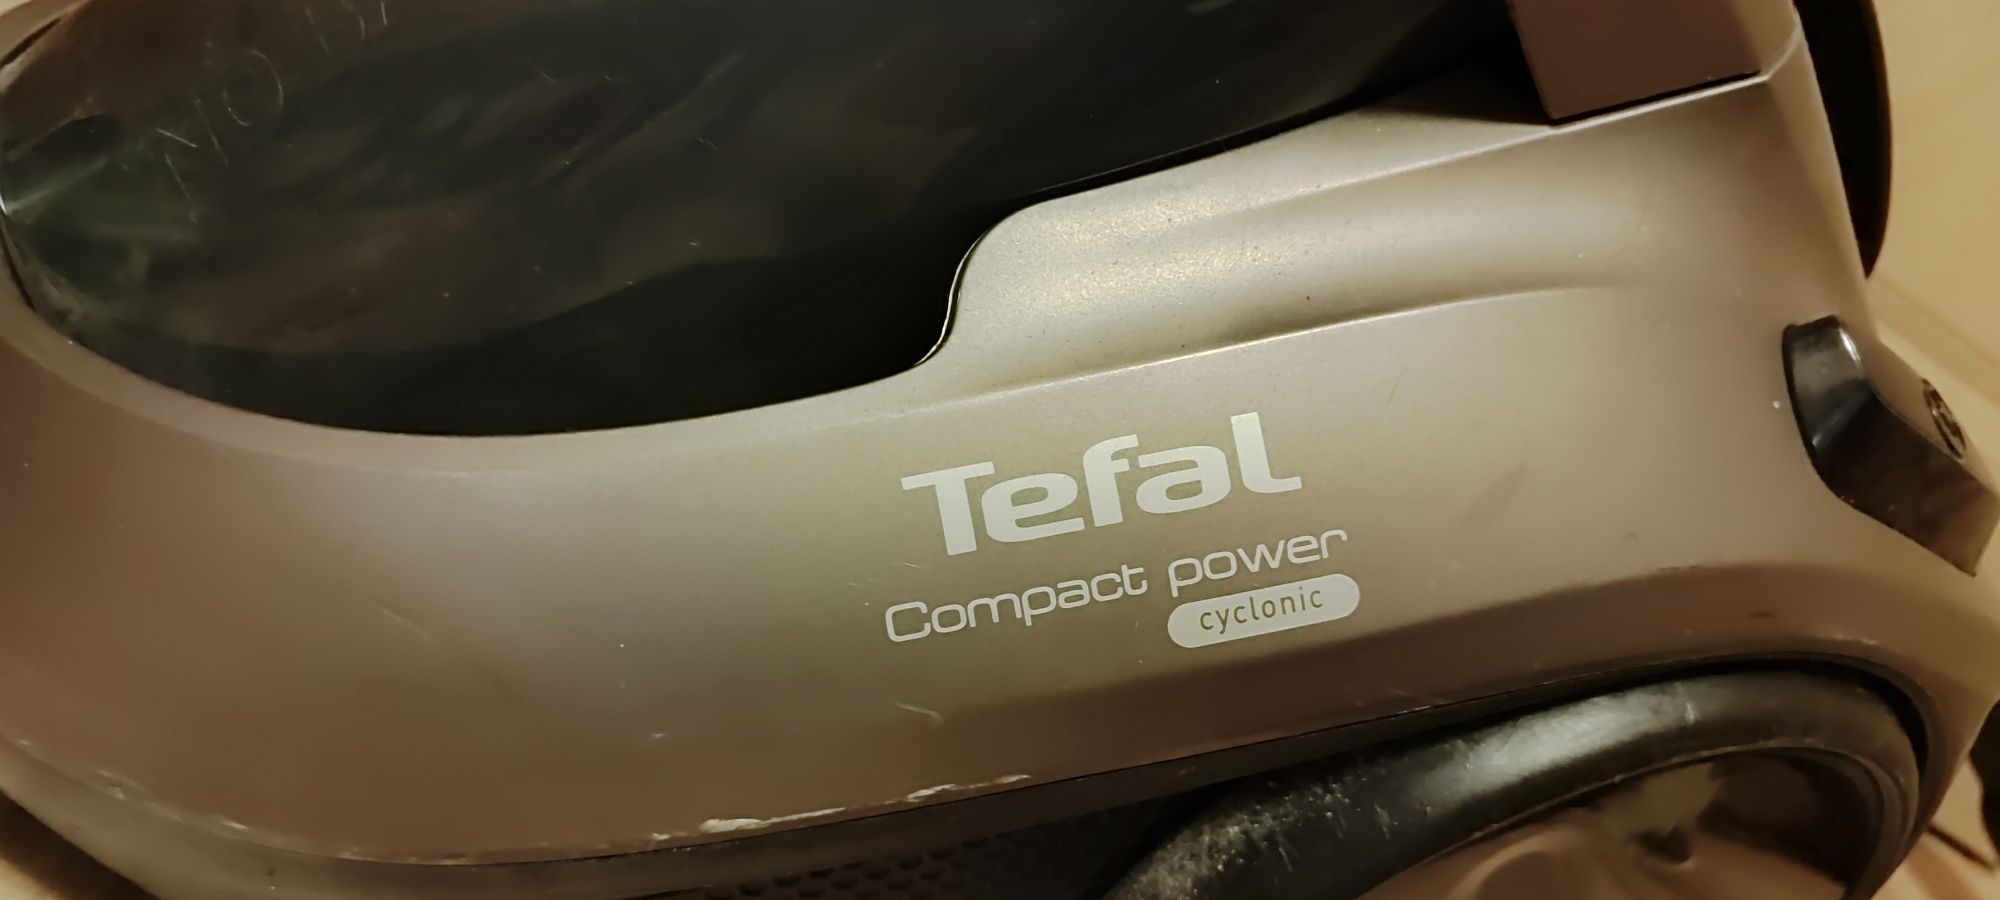 Odlurzacz Tefal compact power cyclonic